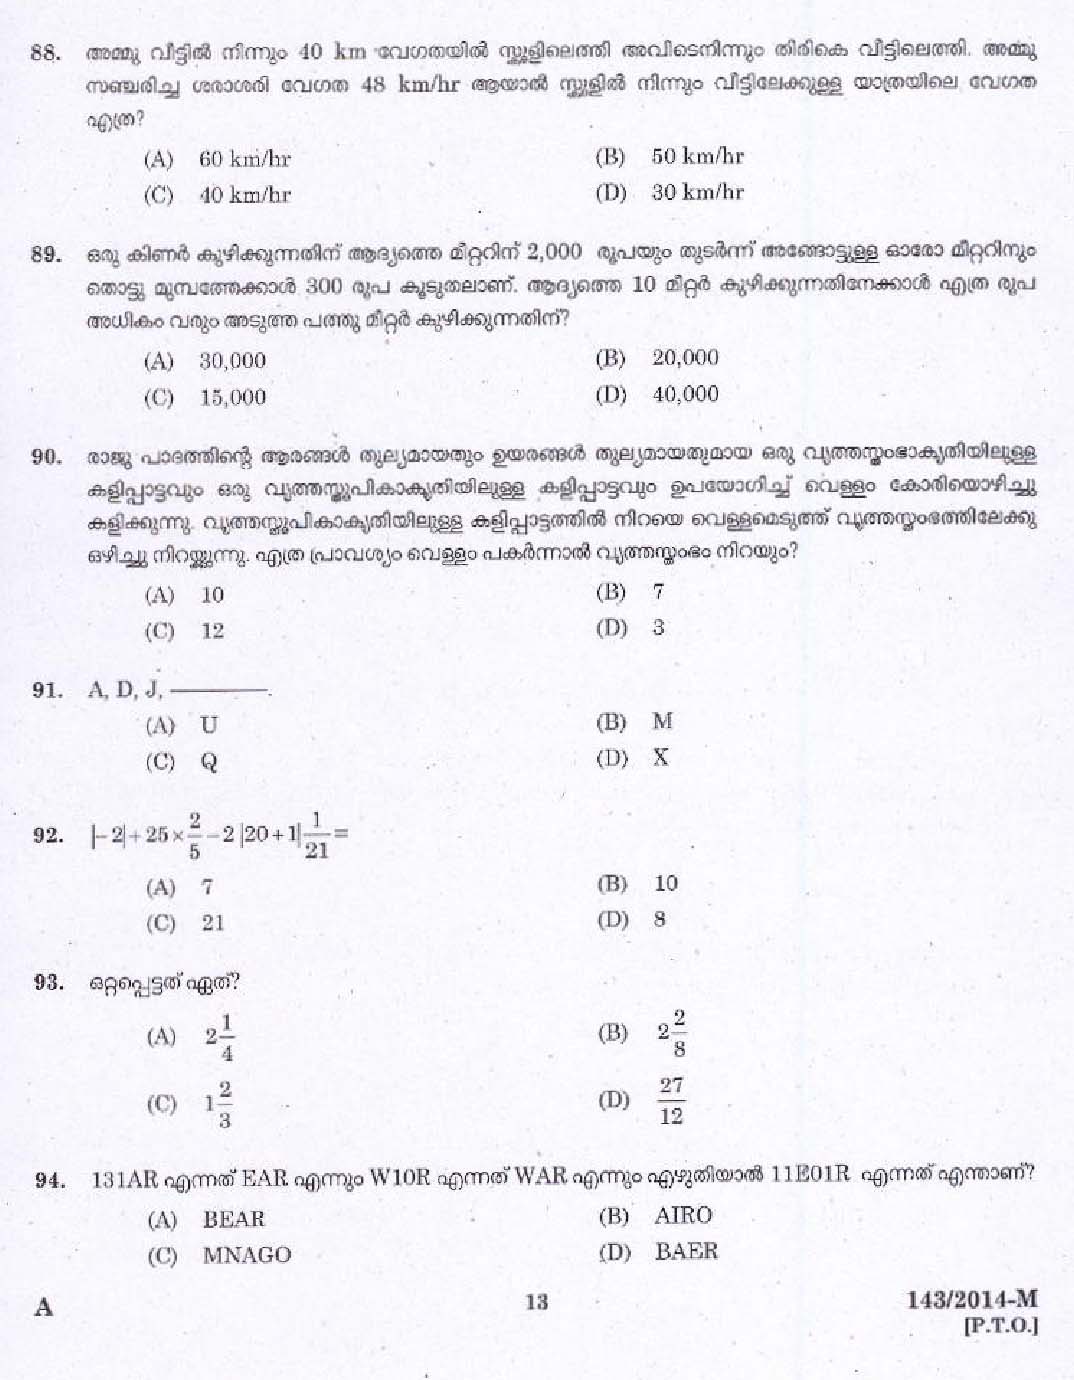 Kerala PSC Women Police Constable Exam Question Code 1432014 M 11